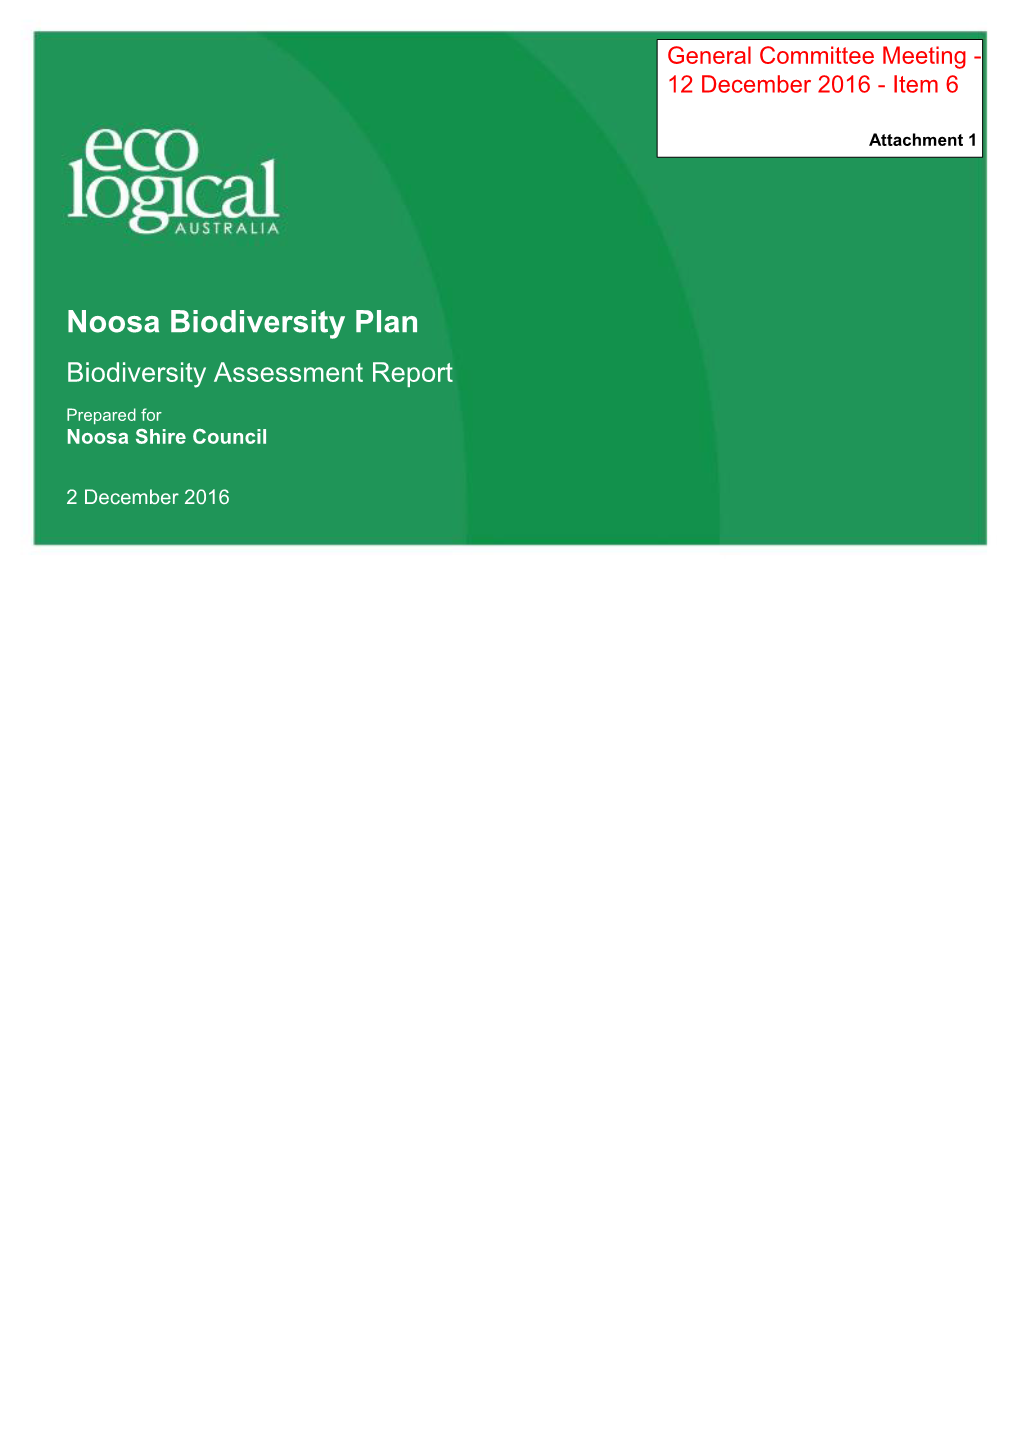 Noosa Biodiversity Plan Biodiversity Assessment Report